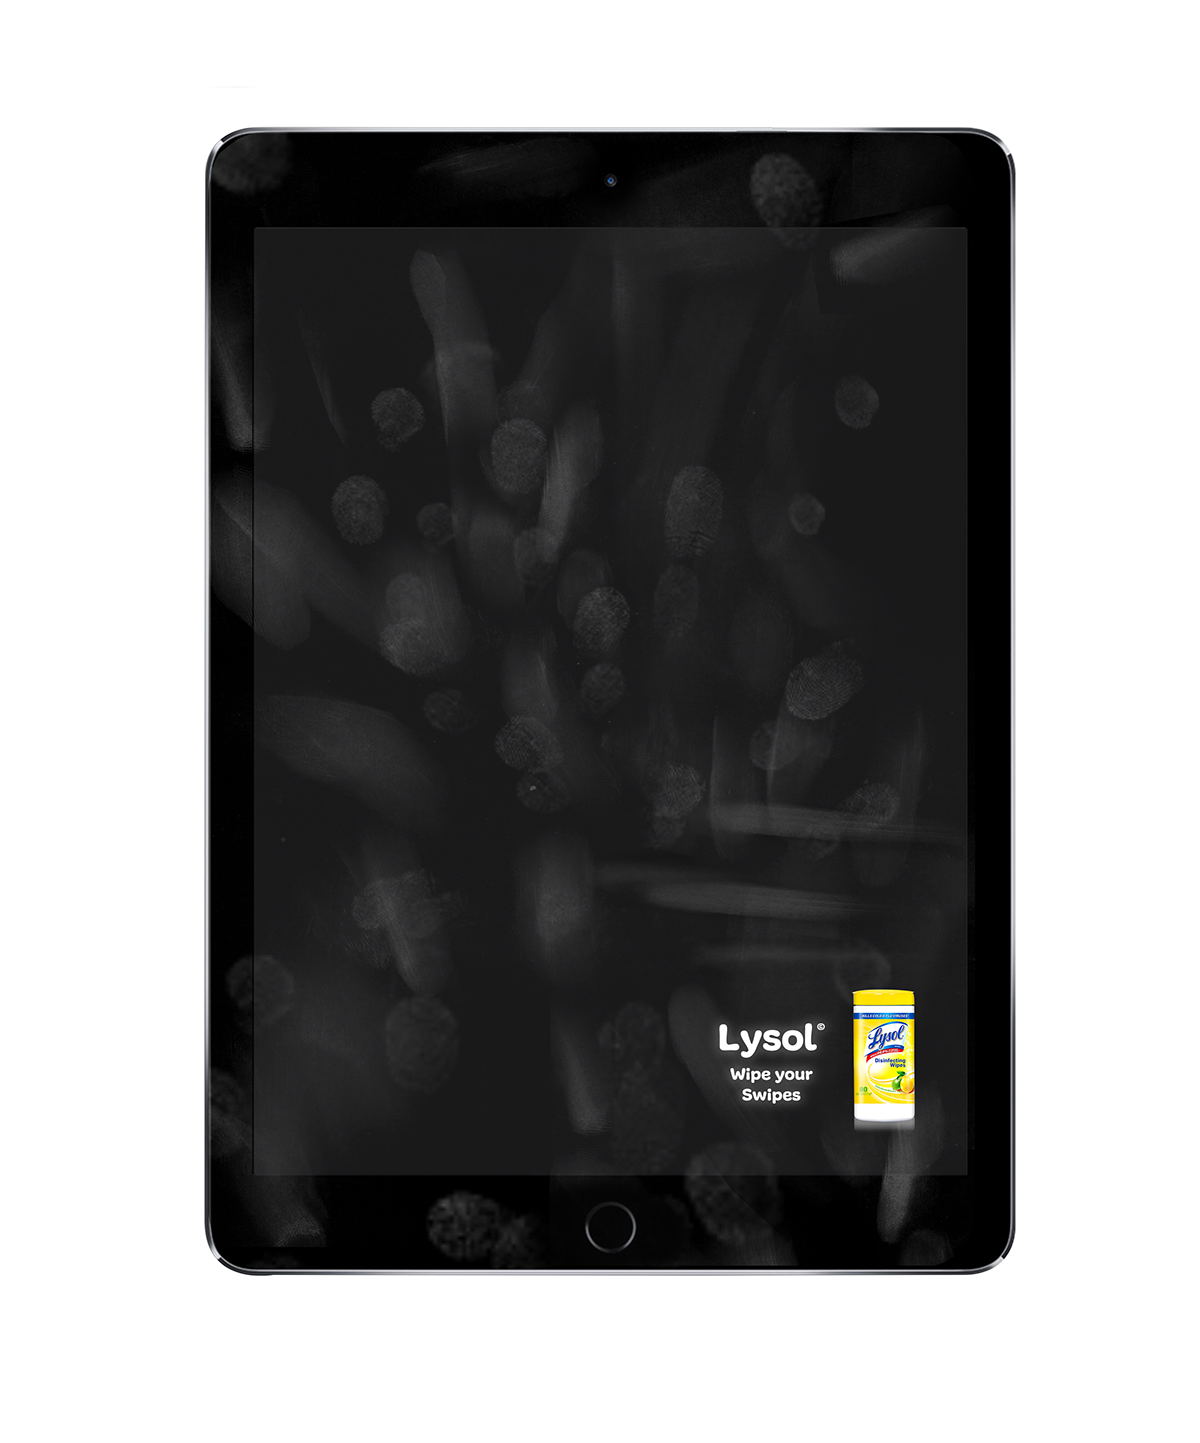 Lysol WipeYourSwipes SWIPE SWIPES Disinfectant creativityawards app application wipes tinder wordfeud candycrush